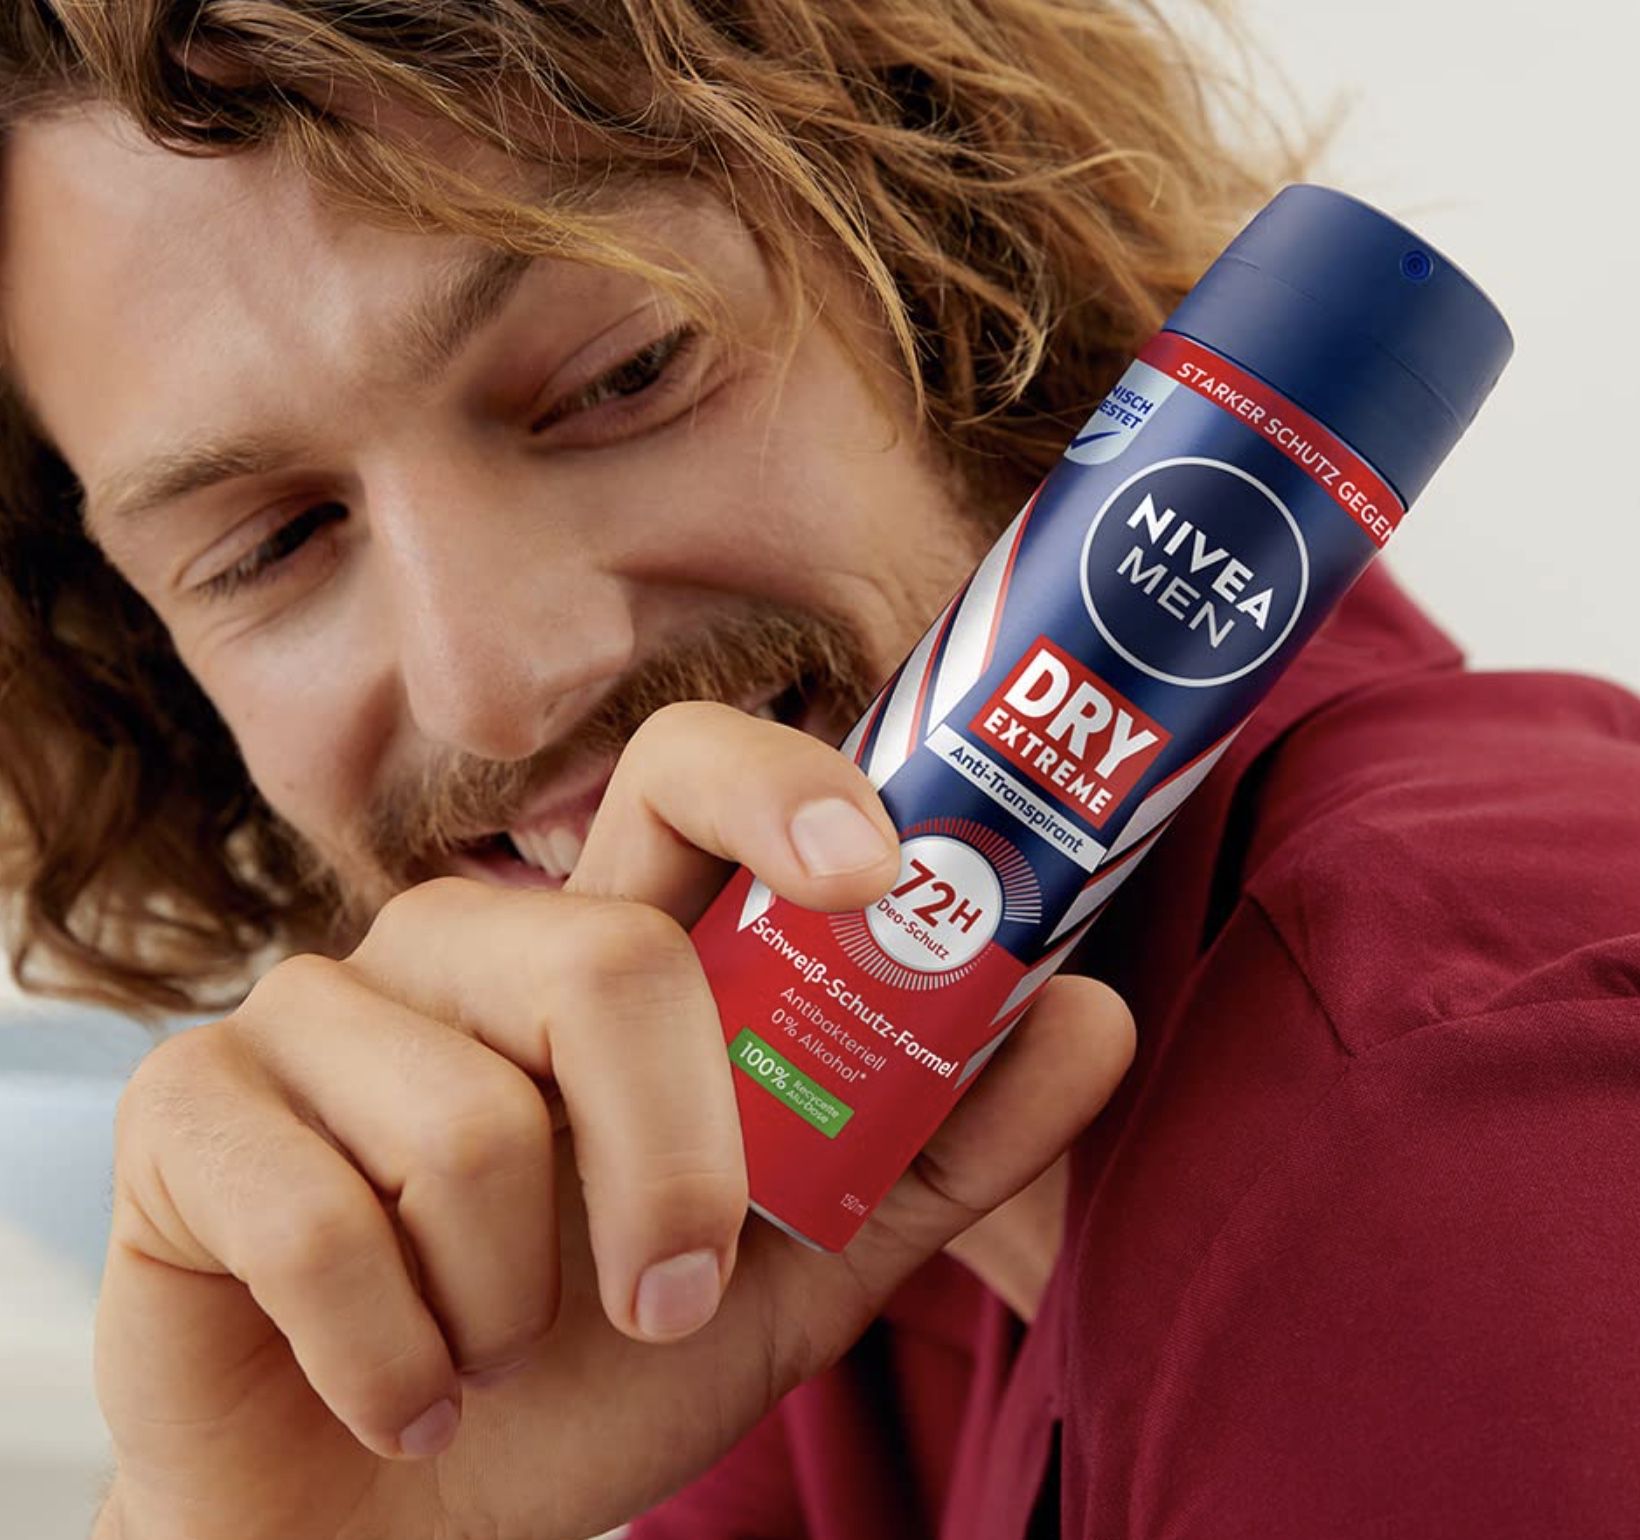 NIVEA MEN Dry Extreme Deo Spray mit Anti Transpirant für 1,34€ (statt 2,29€)   Prime Sparabo